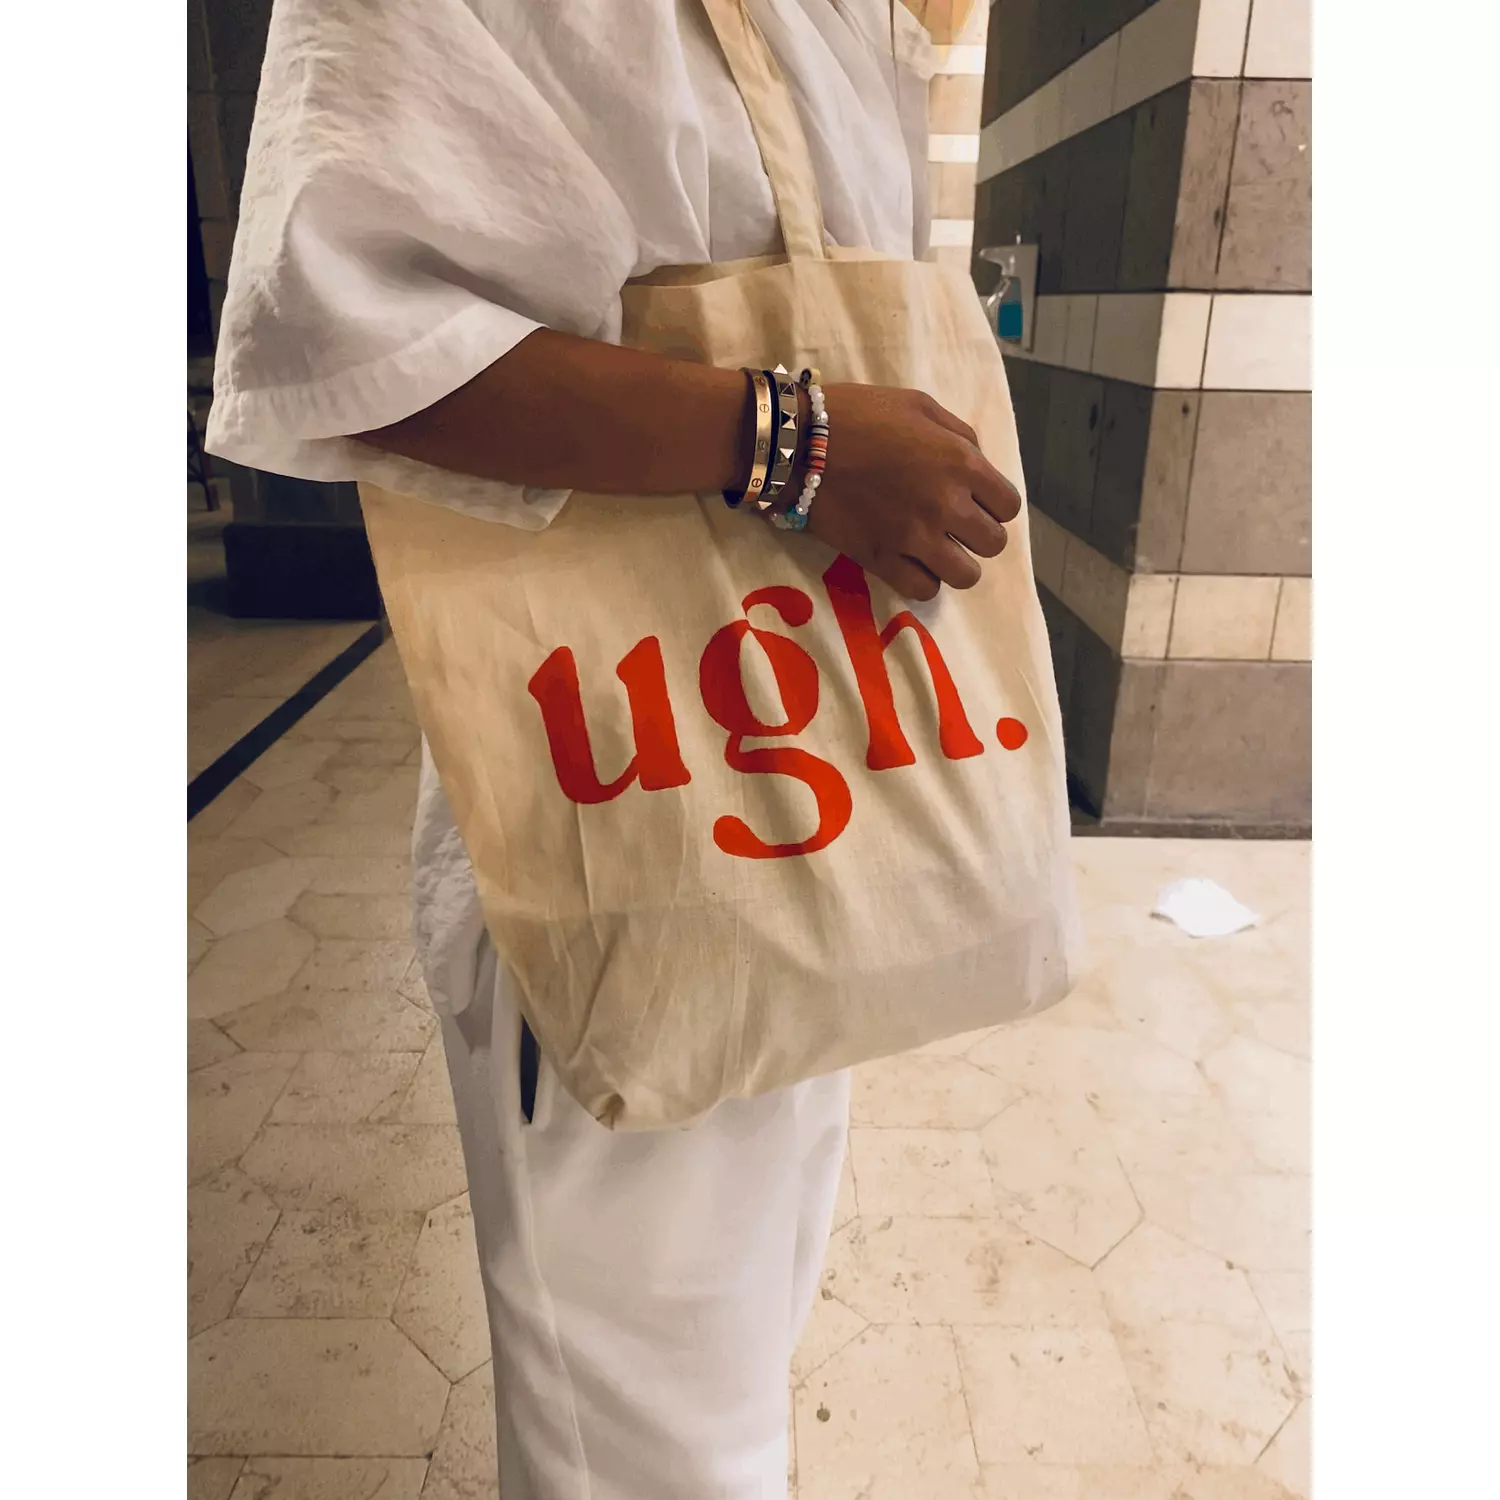 "Ugh" Handpainted tote bag  hover image